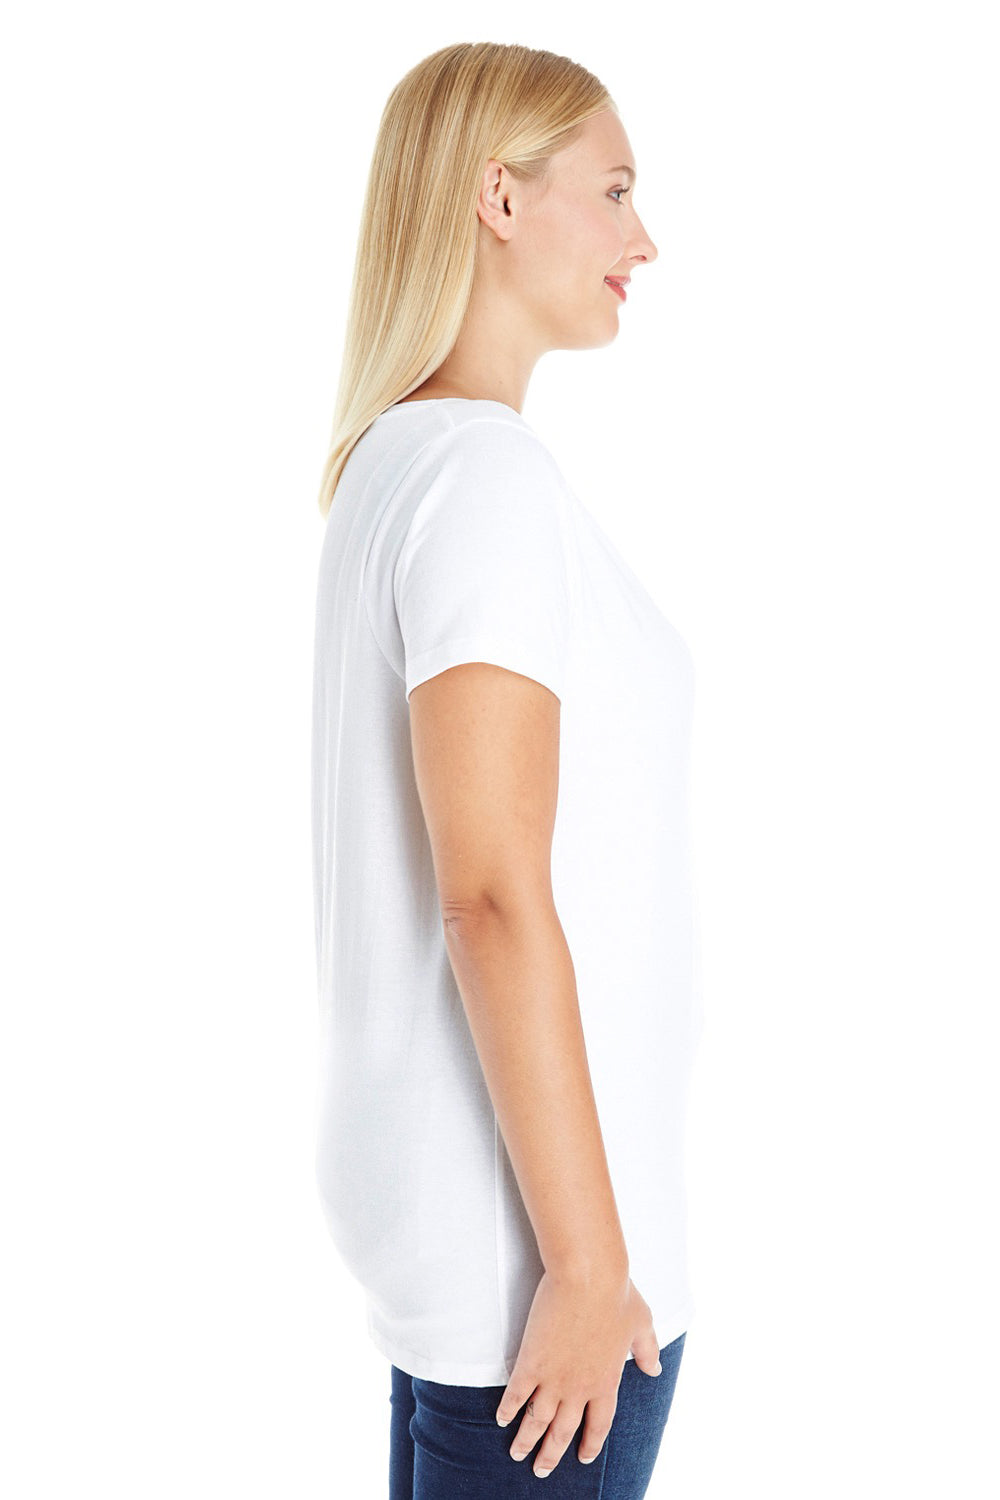 LAT 3807 Womens Premium Jersey Short Sleeve V-Neck T-Shirt White Side